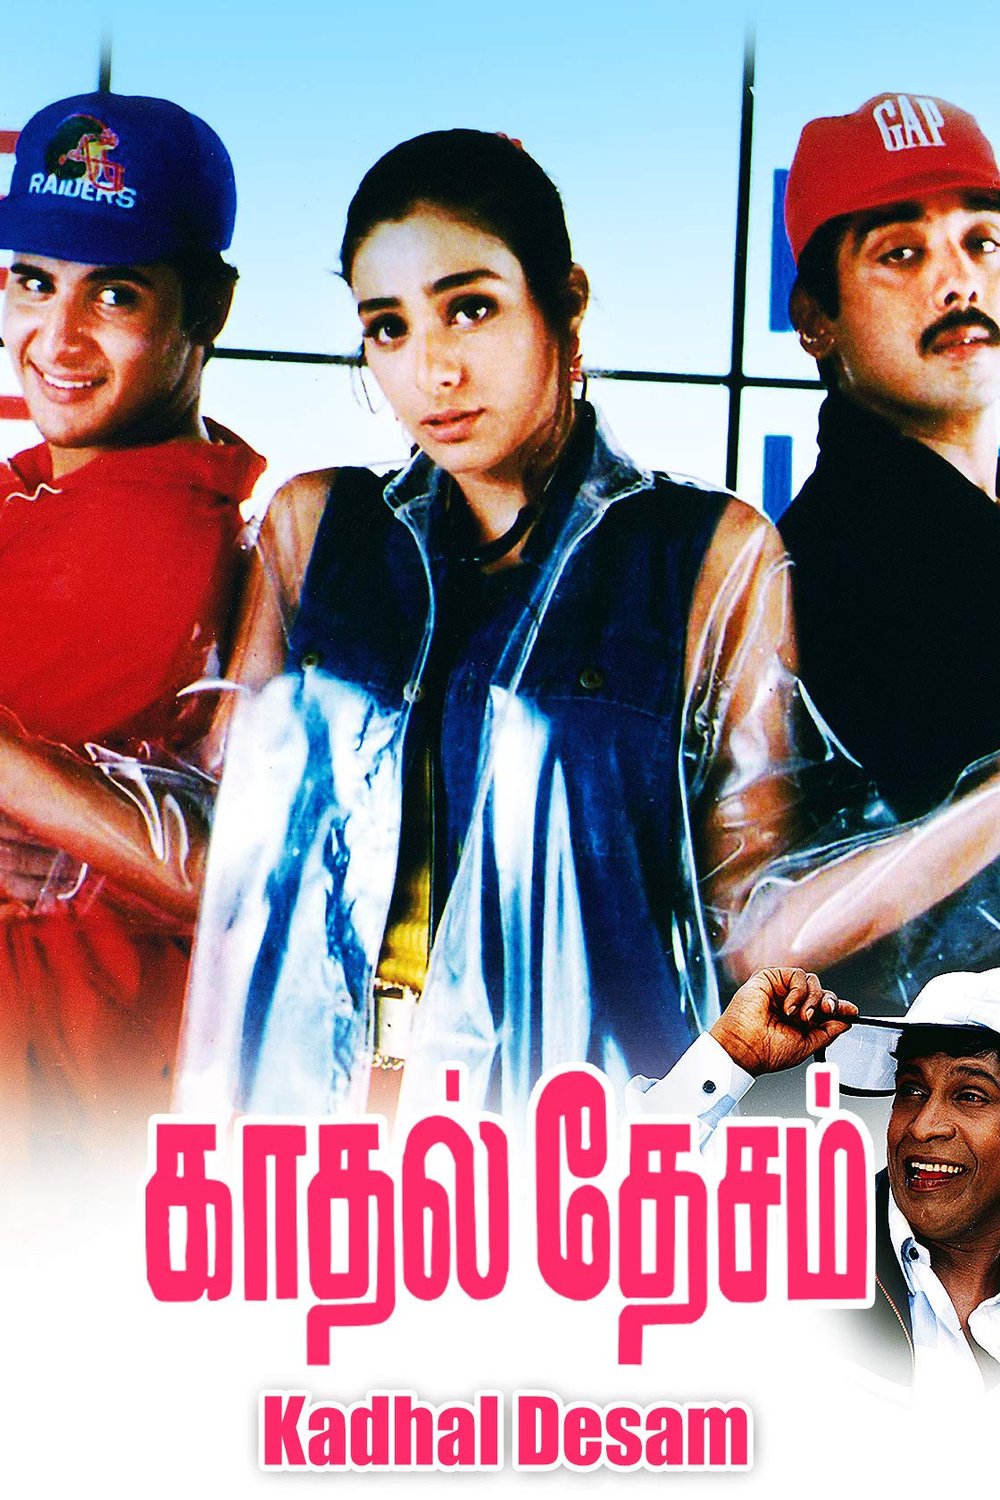 Tamil poster of the movie Kadhal Desam